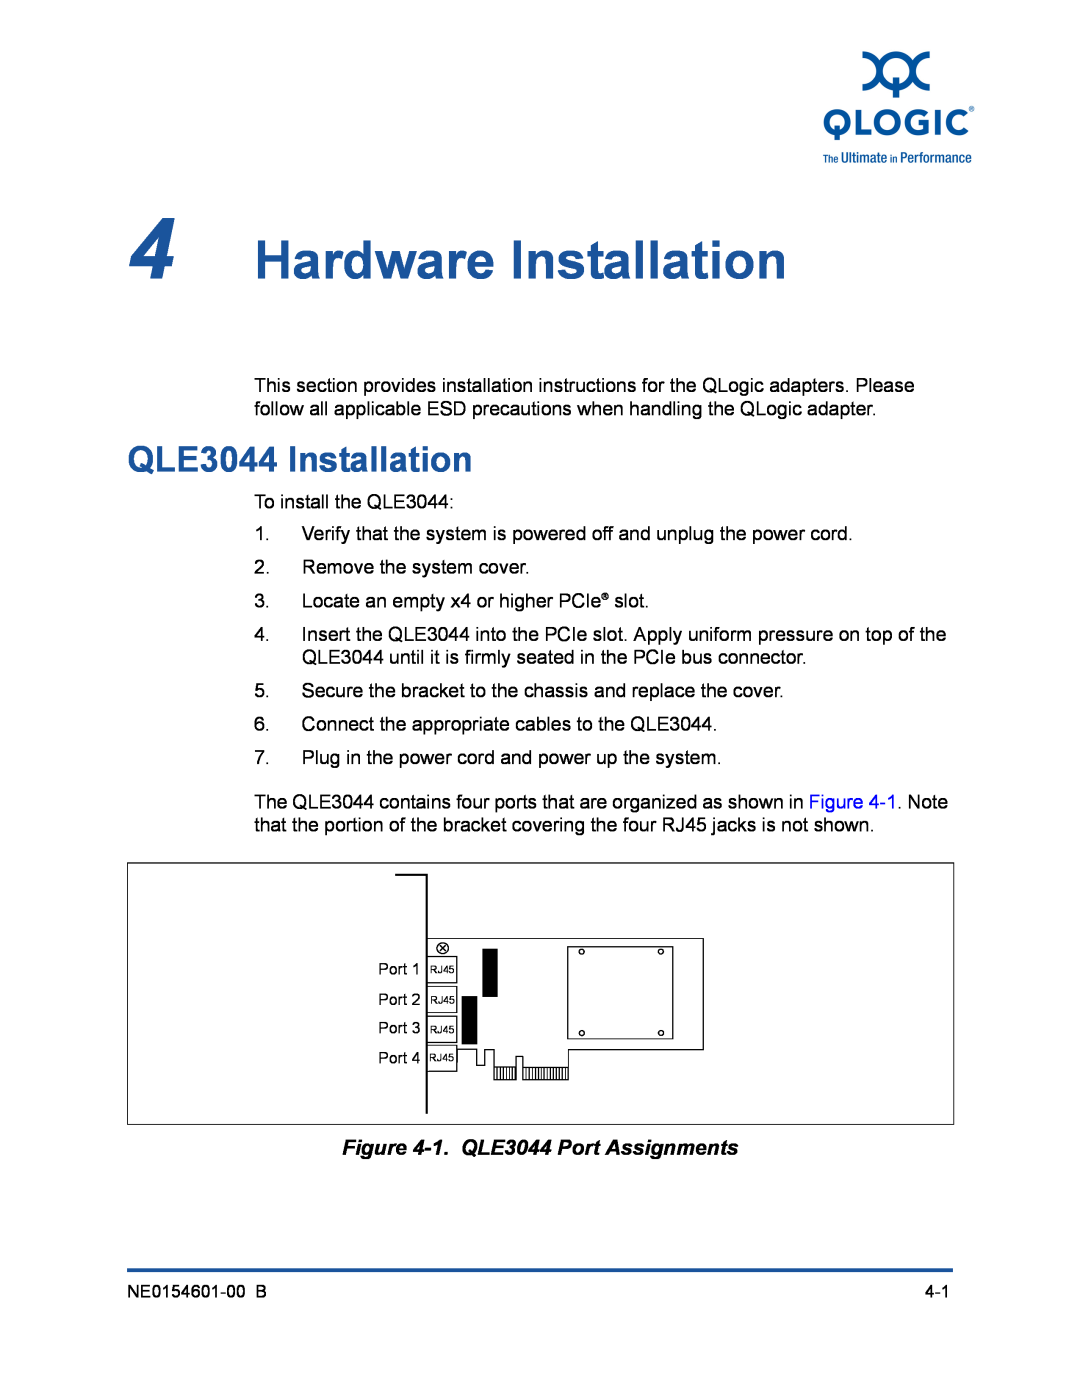 Q-Logic 3000, 3100 manual Hardware Installation, QLE3044 Installation, 1. QLE3044 Port Assignments 